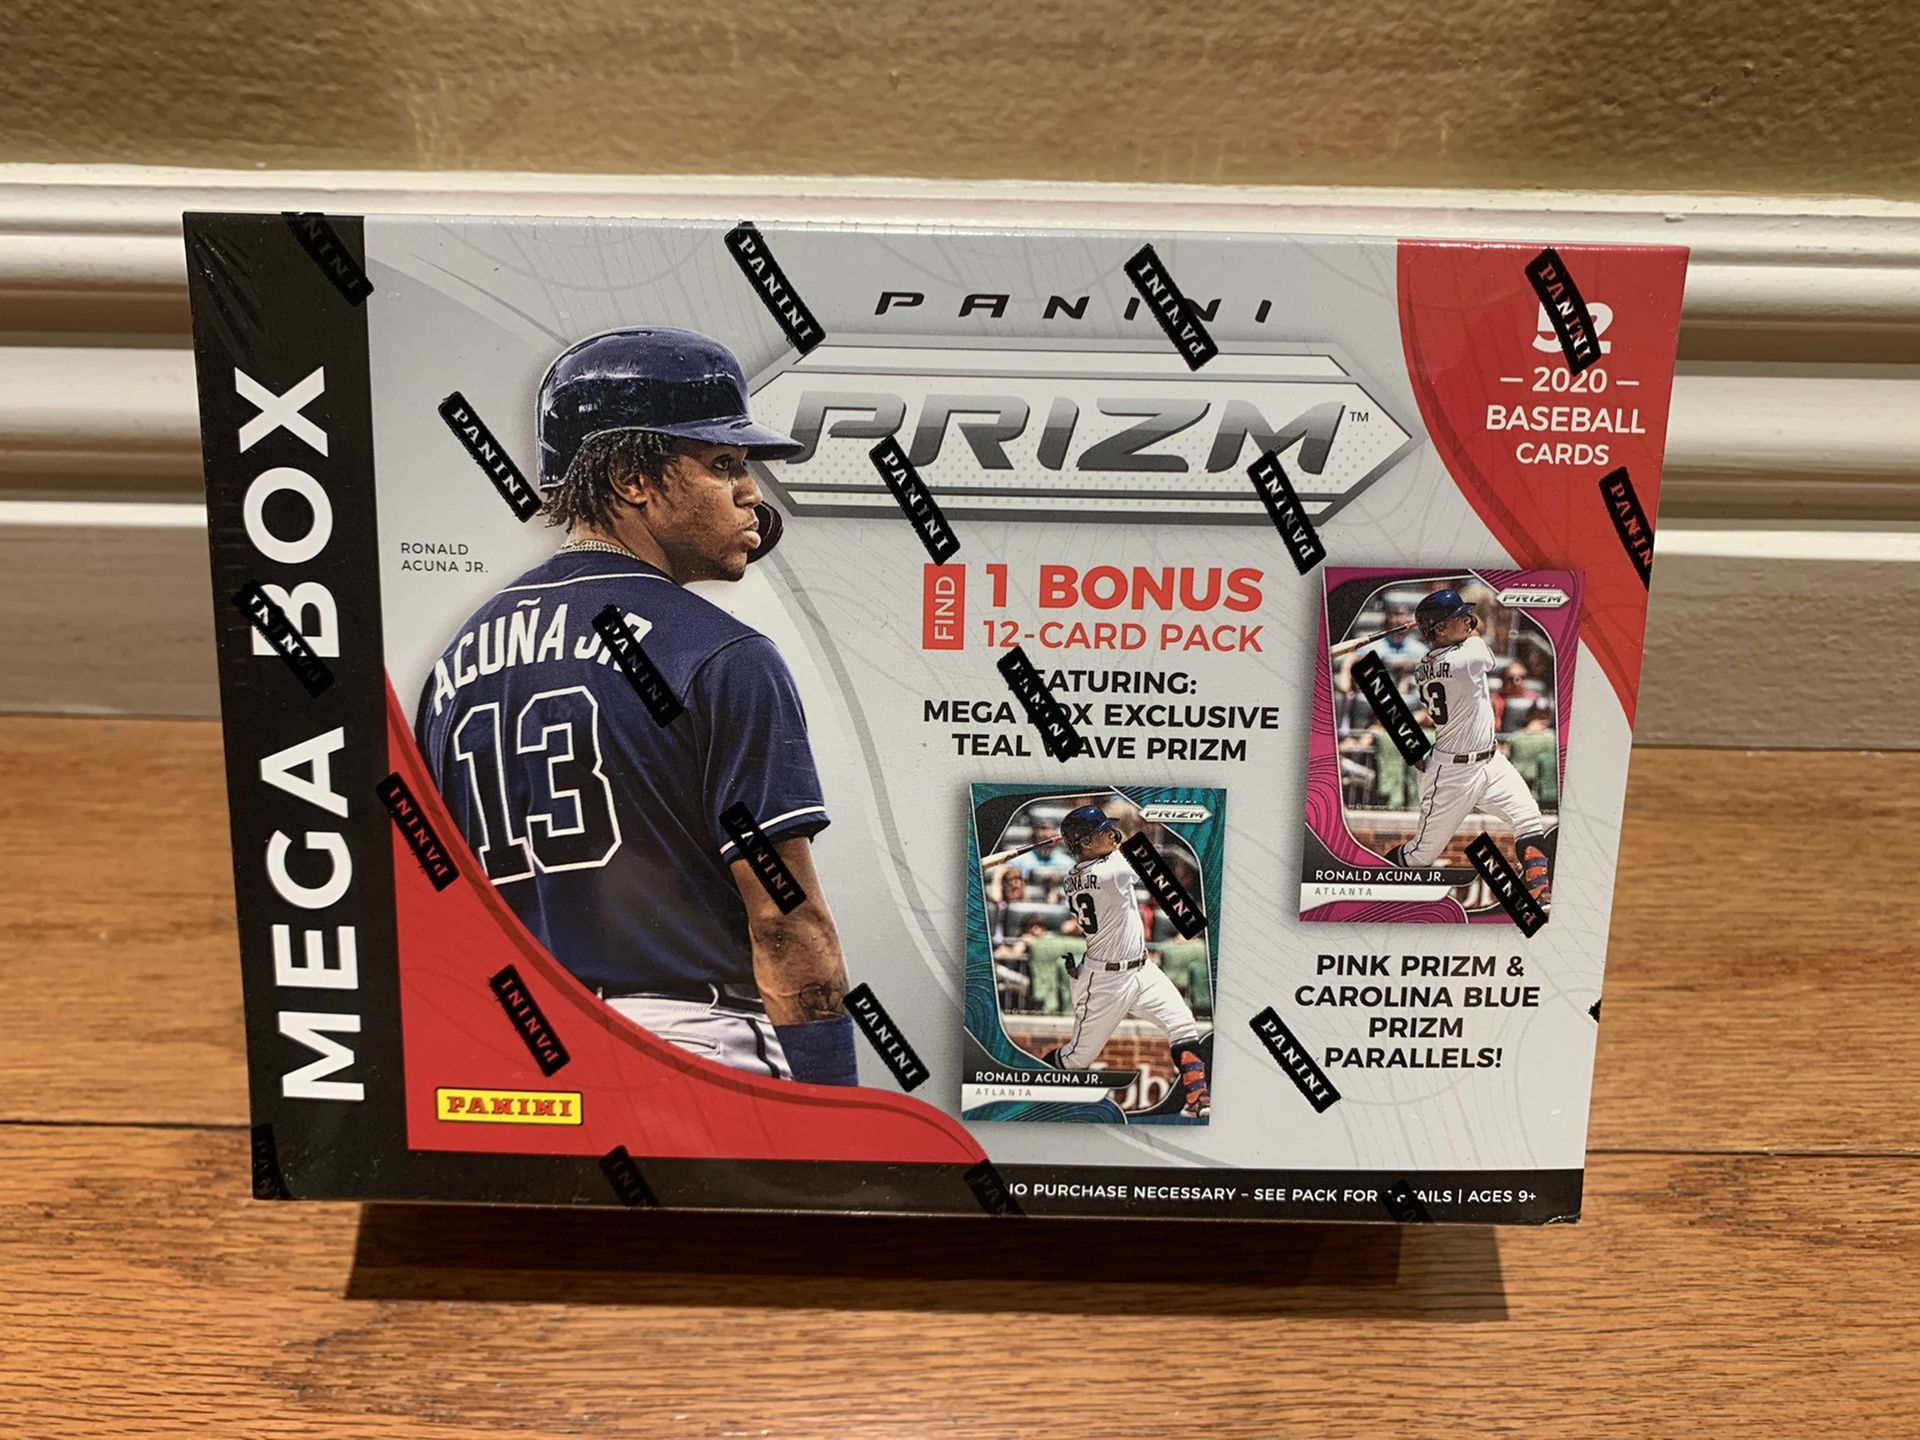 2020 Panini Prizm Baseball Factory Sealed Mega Box 10 Packs Plus 1 Extra Pack 52 Cards Per Box